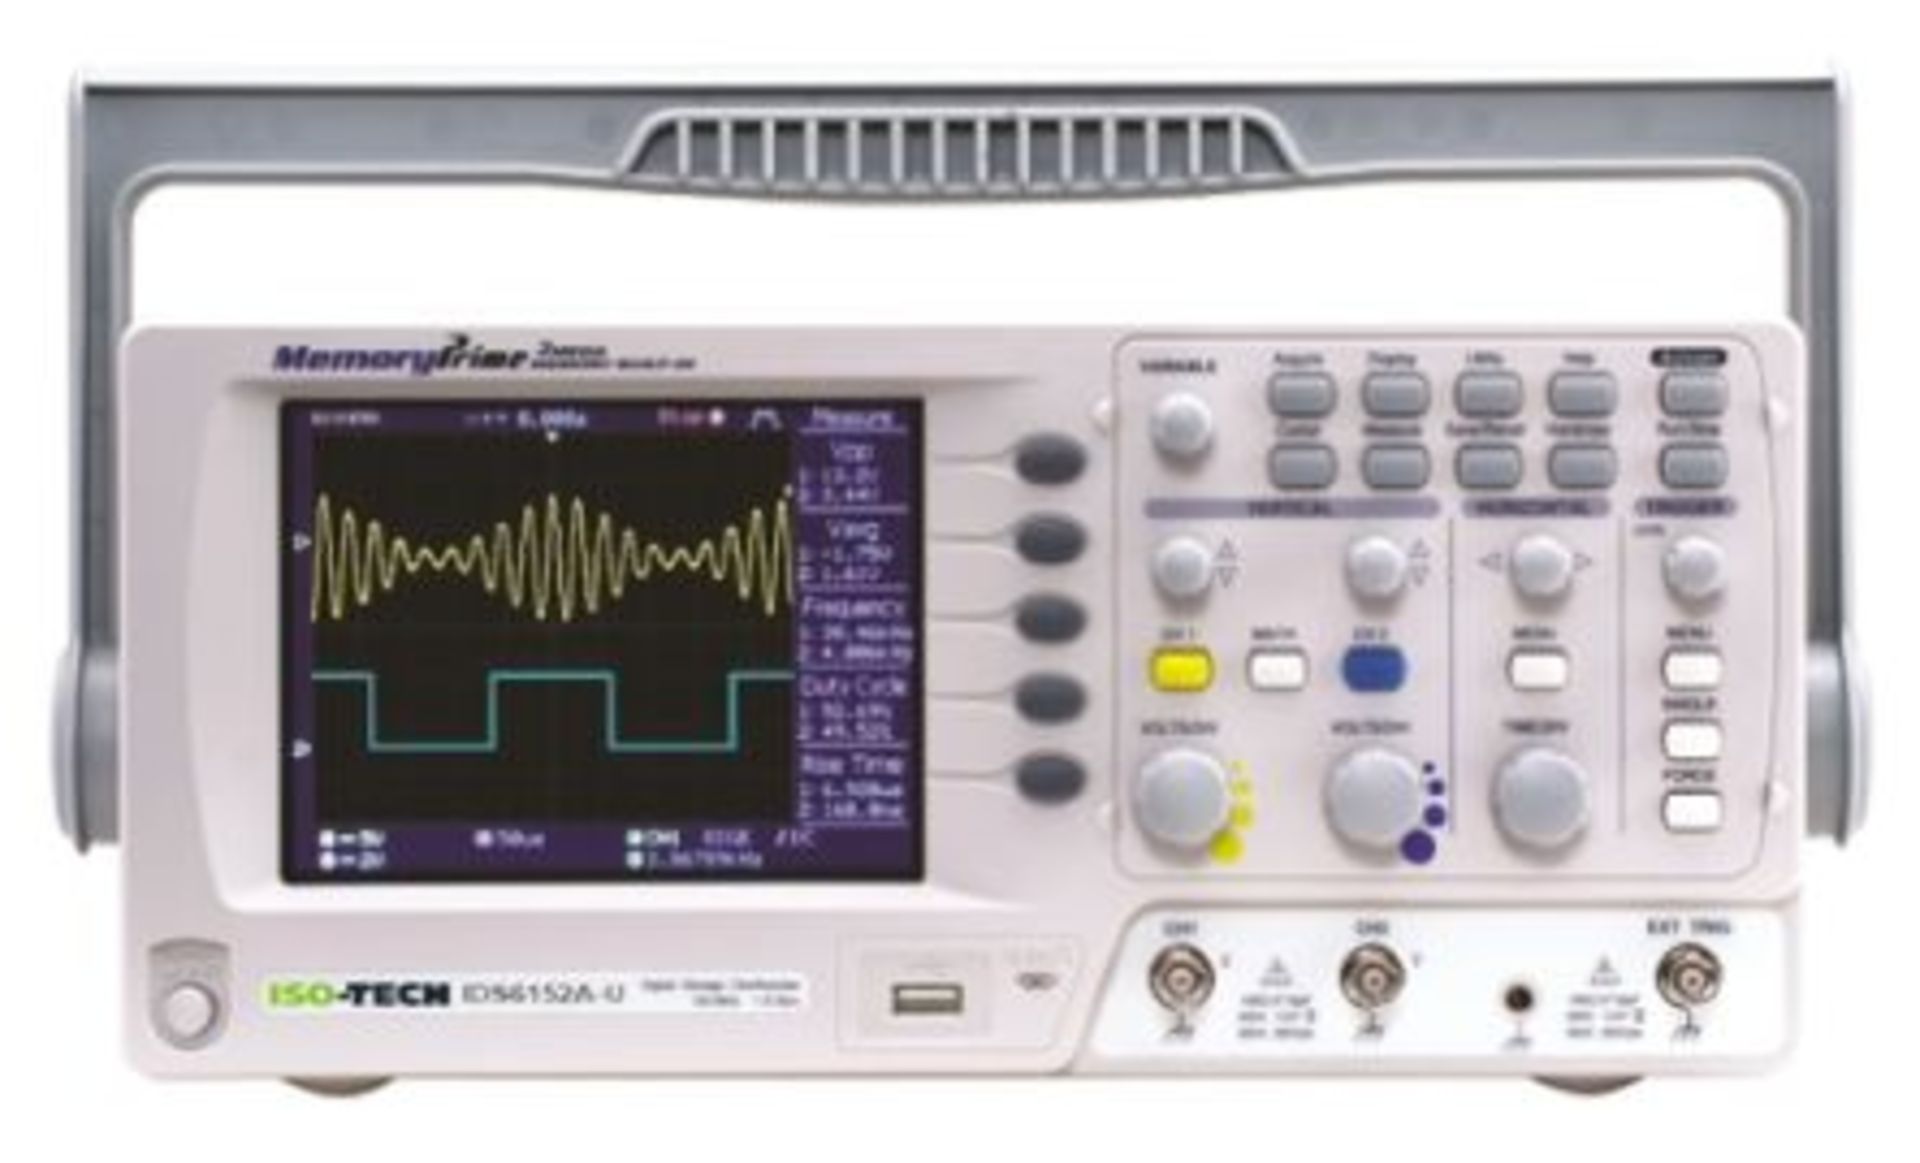 ISO-TECH IDS6152A-U Digital Oscilloscope, 2 Channels, 150MHz